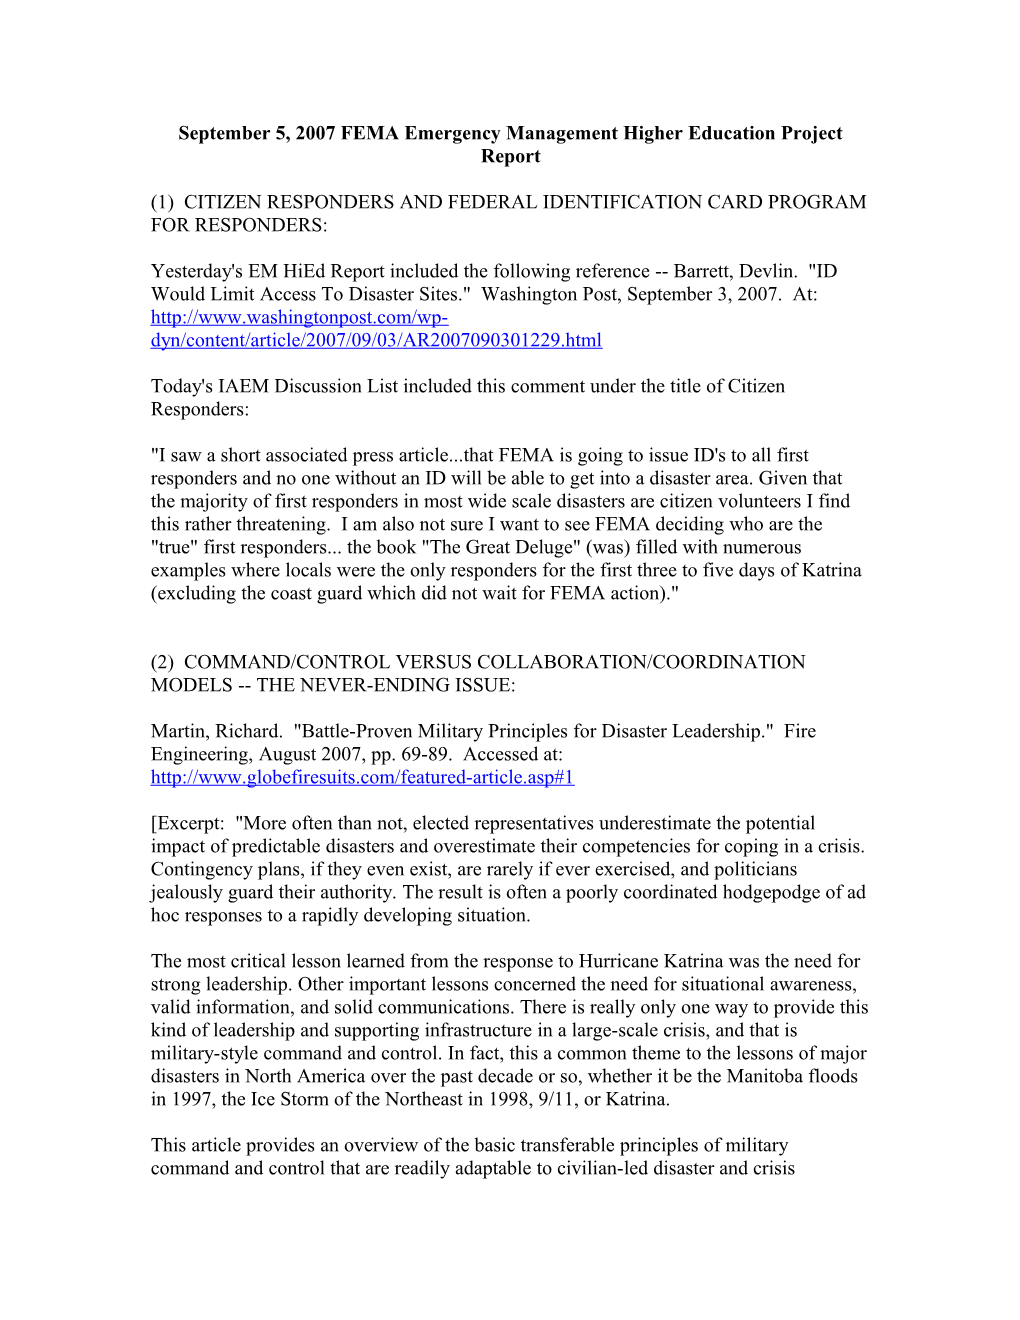 September 5, 2007 FEMA Emergency Management Higher Education Project Report